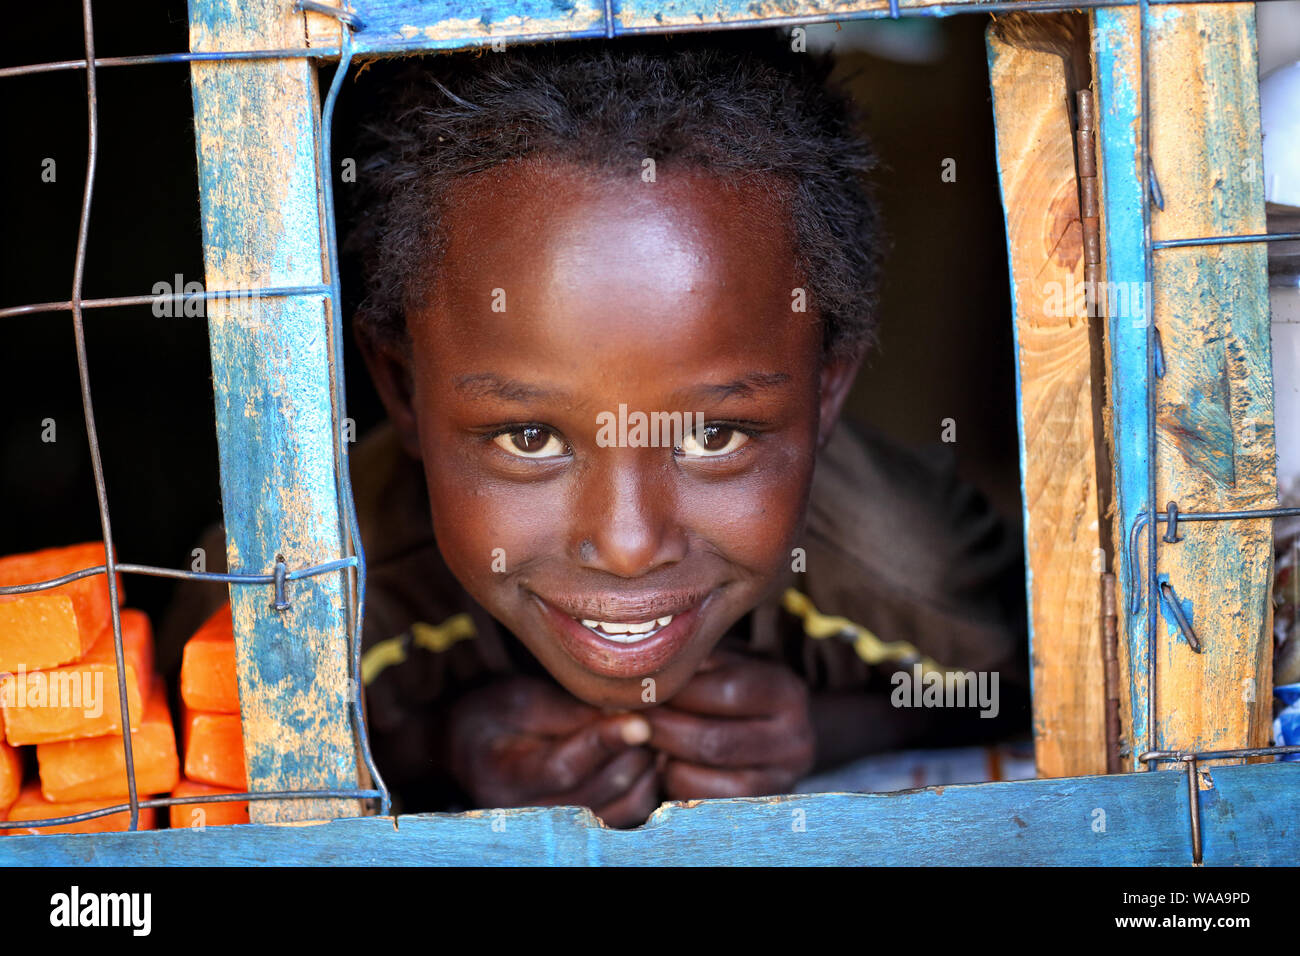 Happy girl dans un petit magasin dans un bidonville de Nairobi, Kenya Banque D'Images